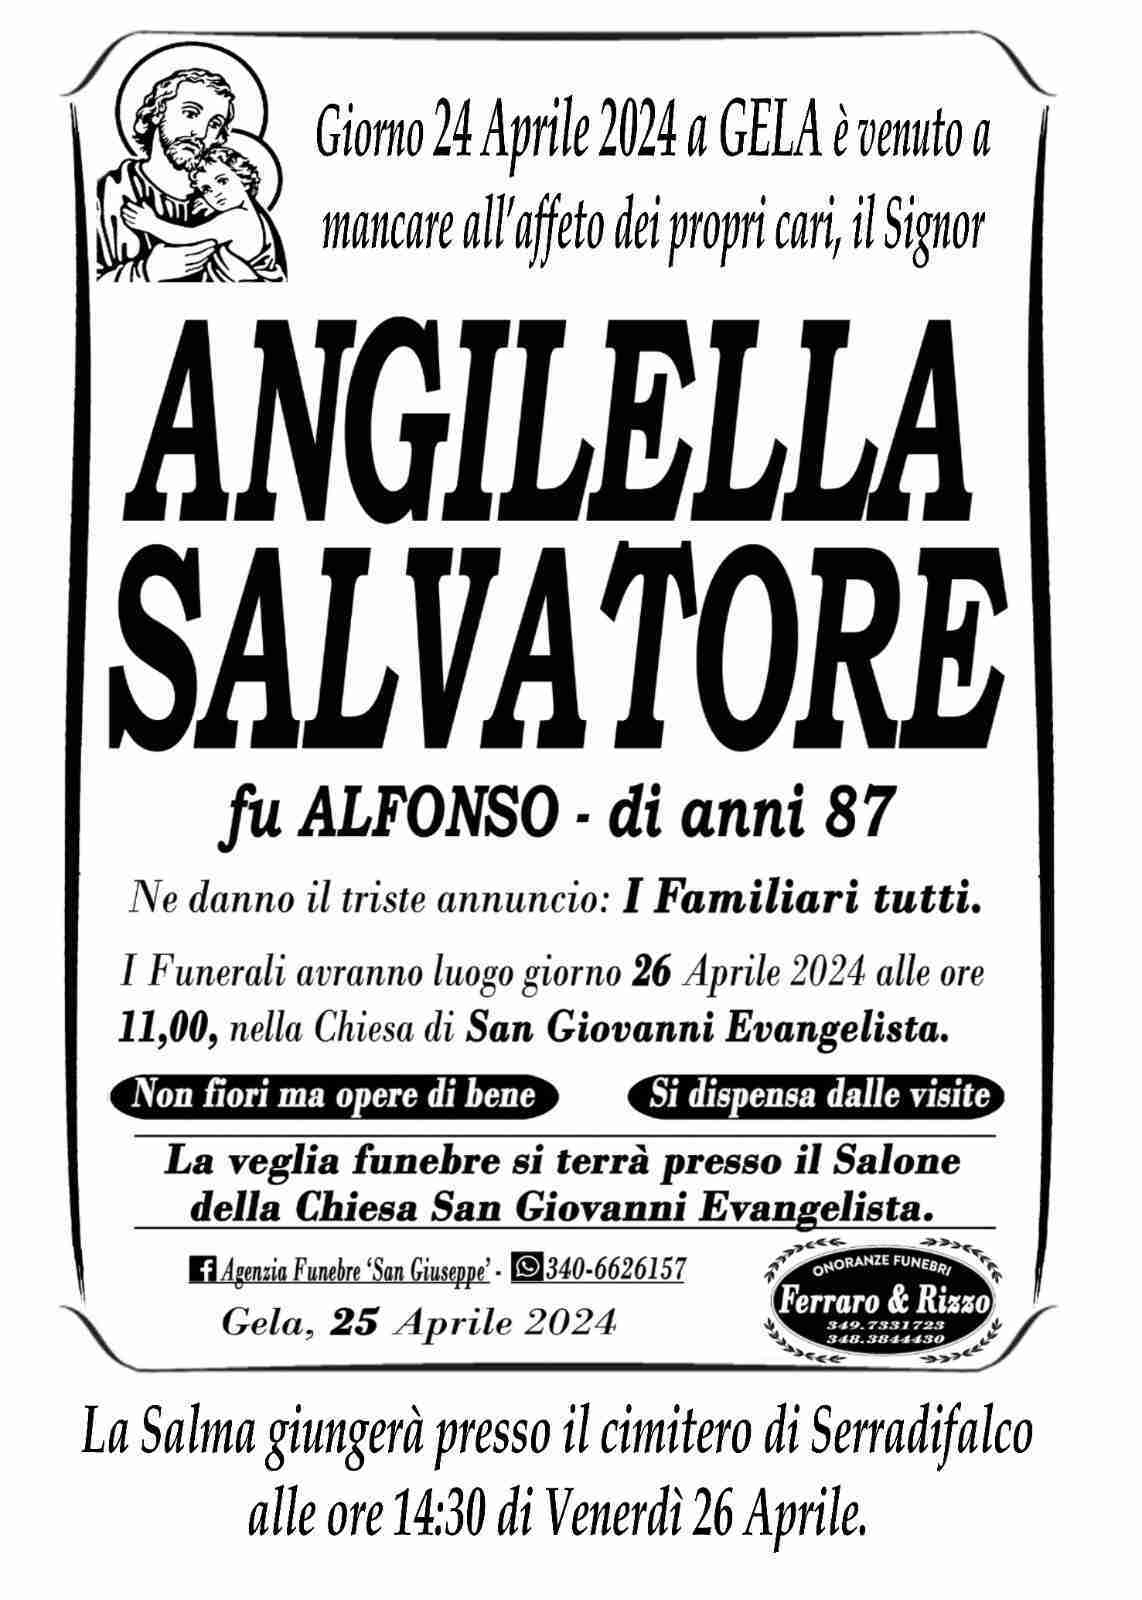 Salvatore Angilella